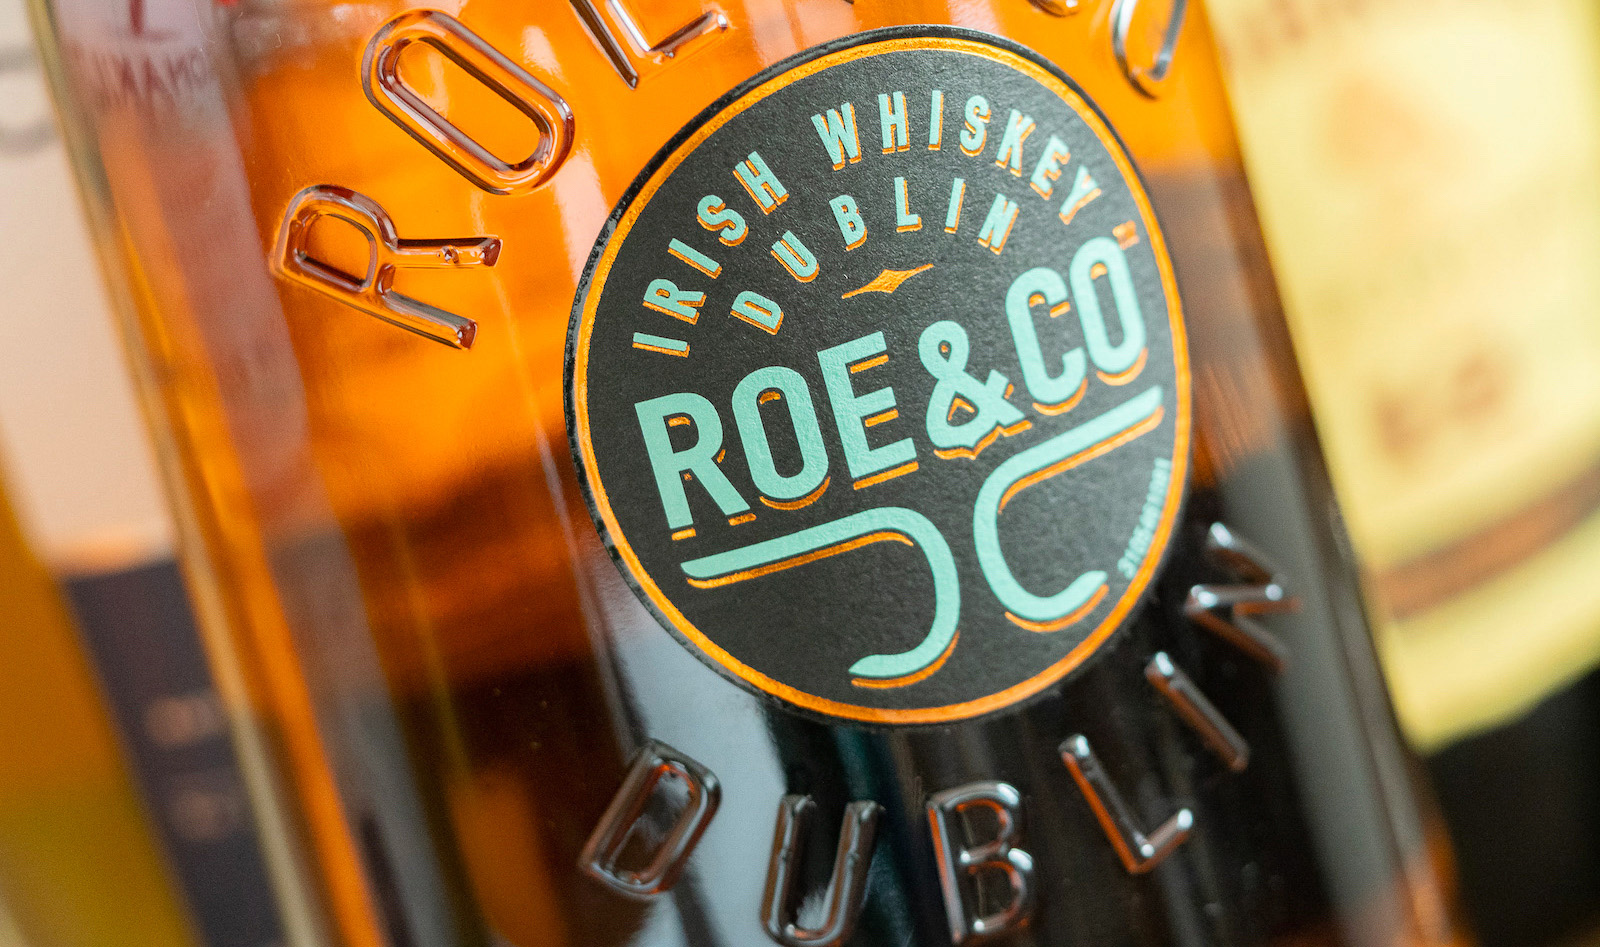 Roe & Co whiskeys